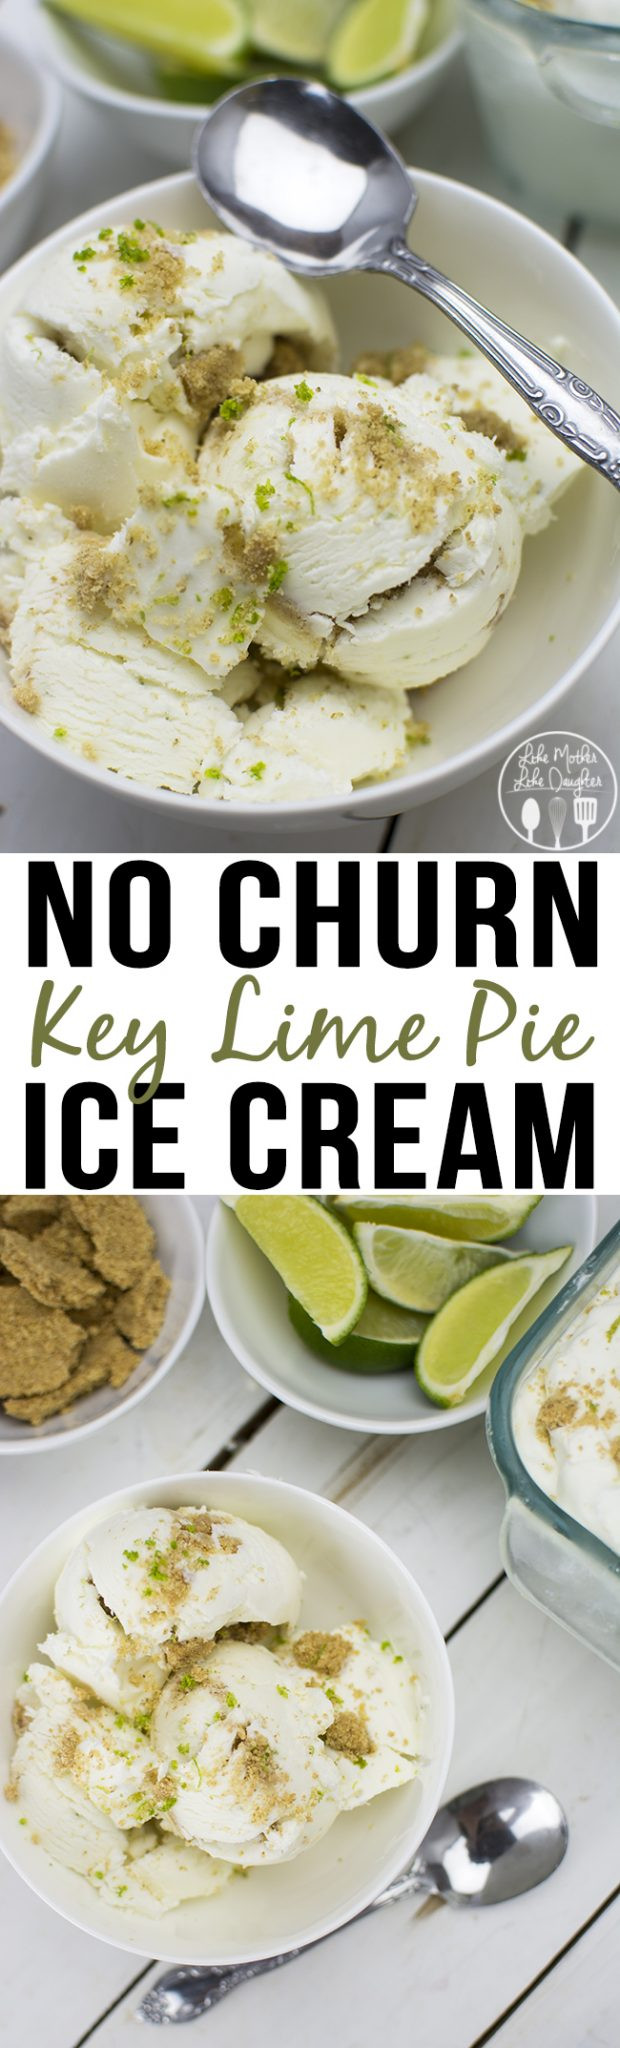 Key Lime Pie Ice Cream
 No Churn Key Lime Pie Ice Cream LMLDFOOD